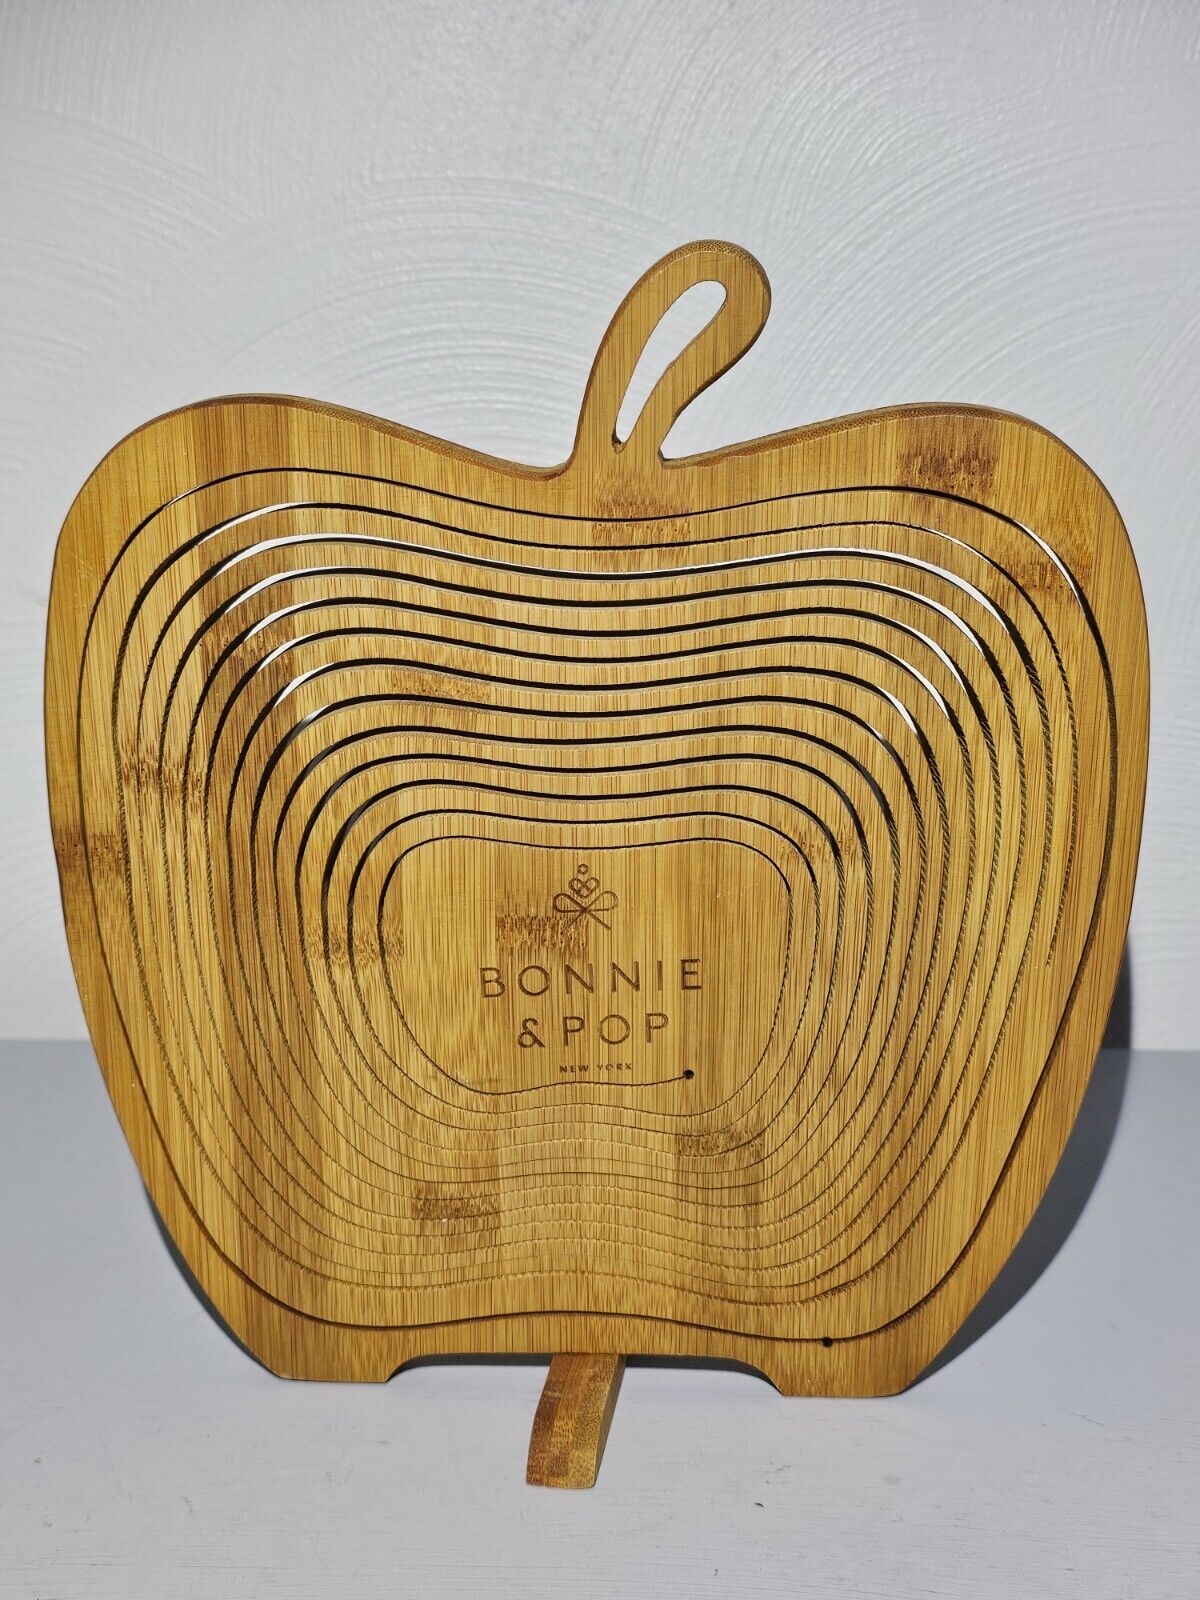 Bonnie & Pop NY Wood Collapsible Apple Folding Fruit Basket Folds Flat Nice